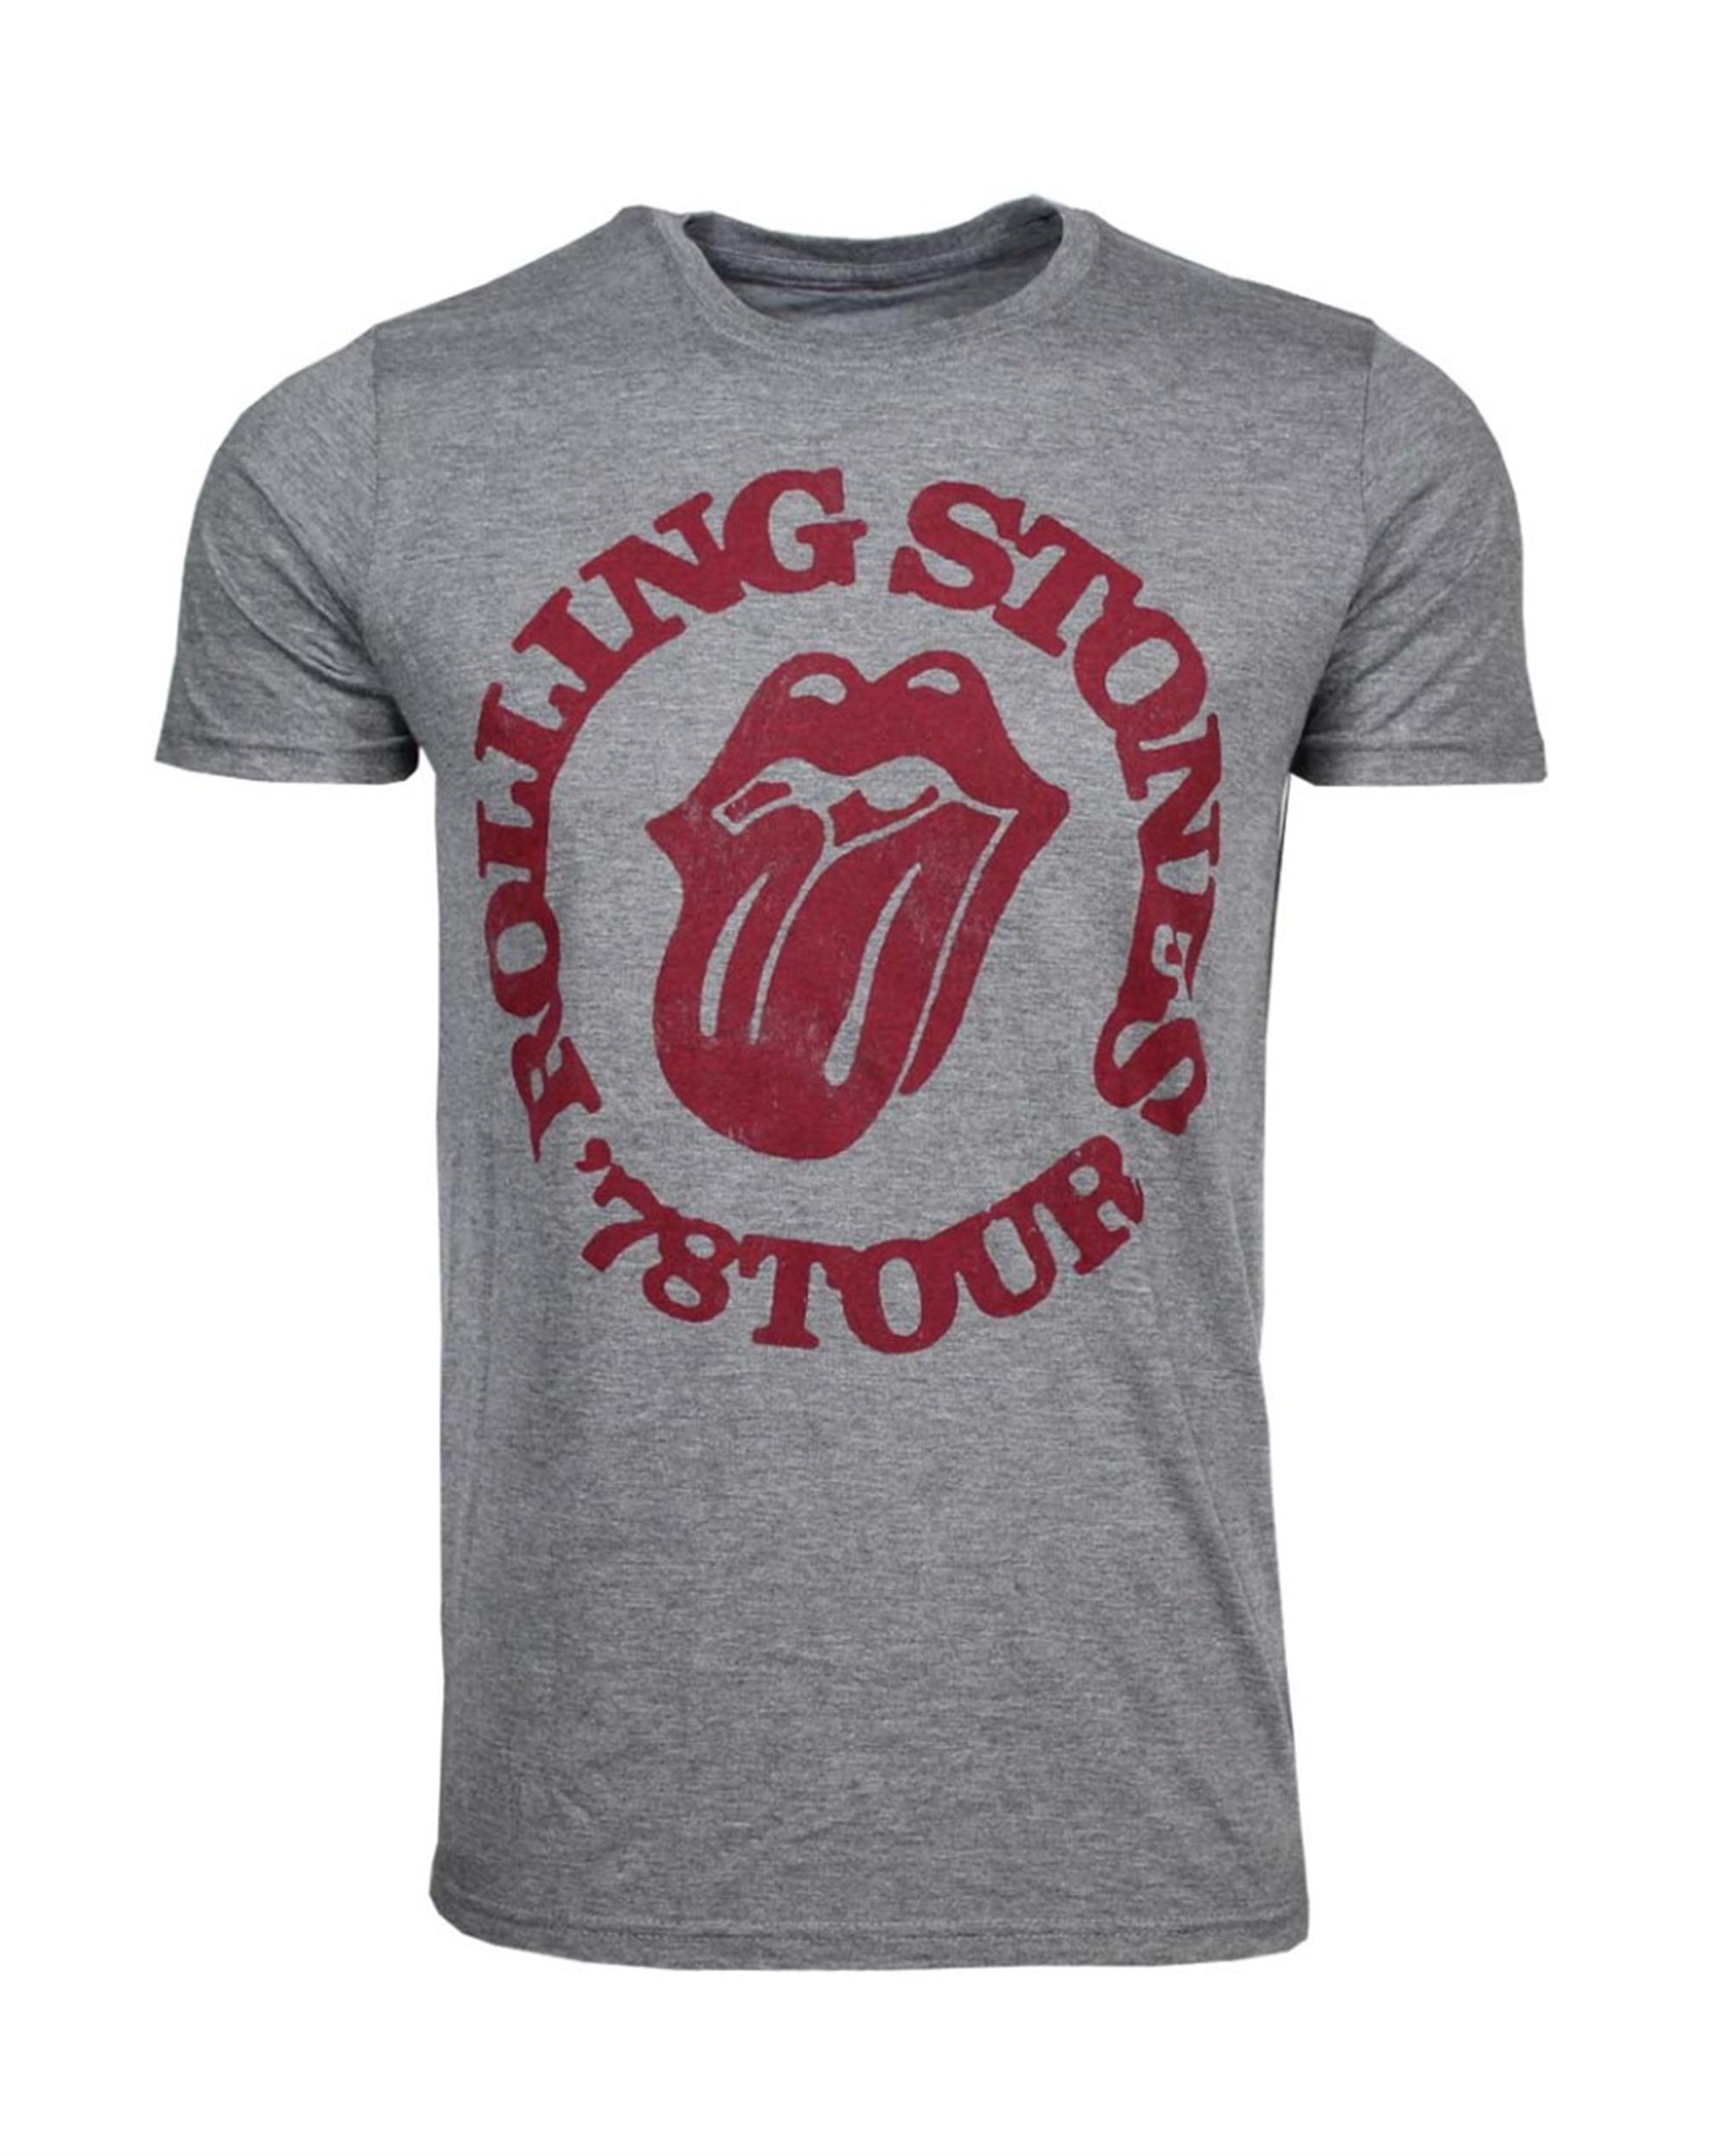 Rolling Stones 78 Tour Circle T-Shirt